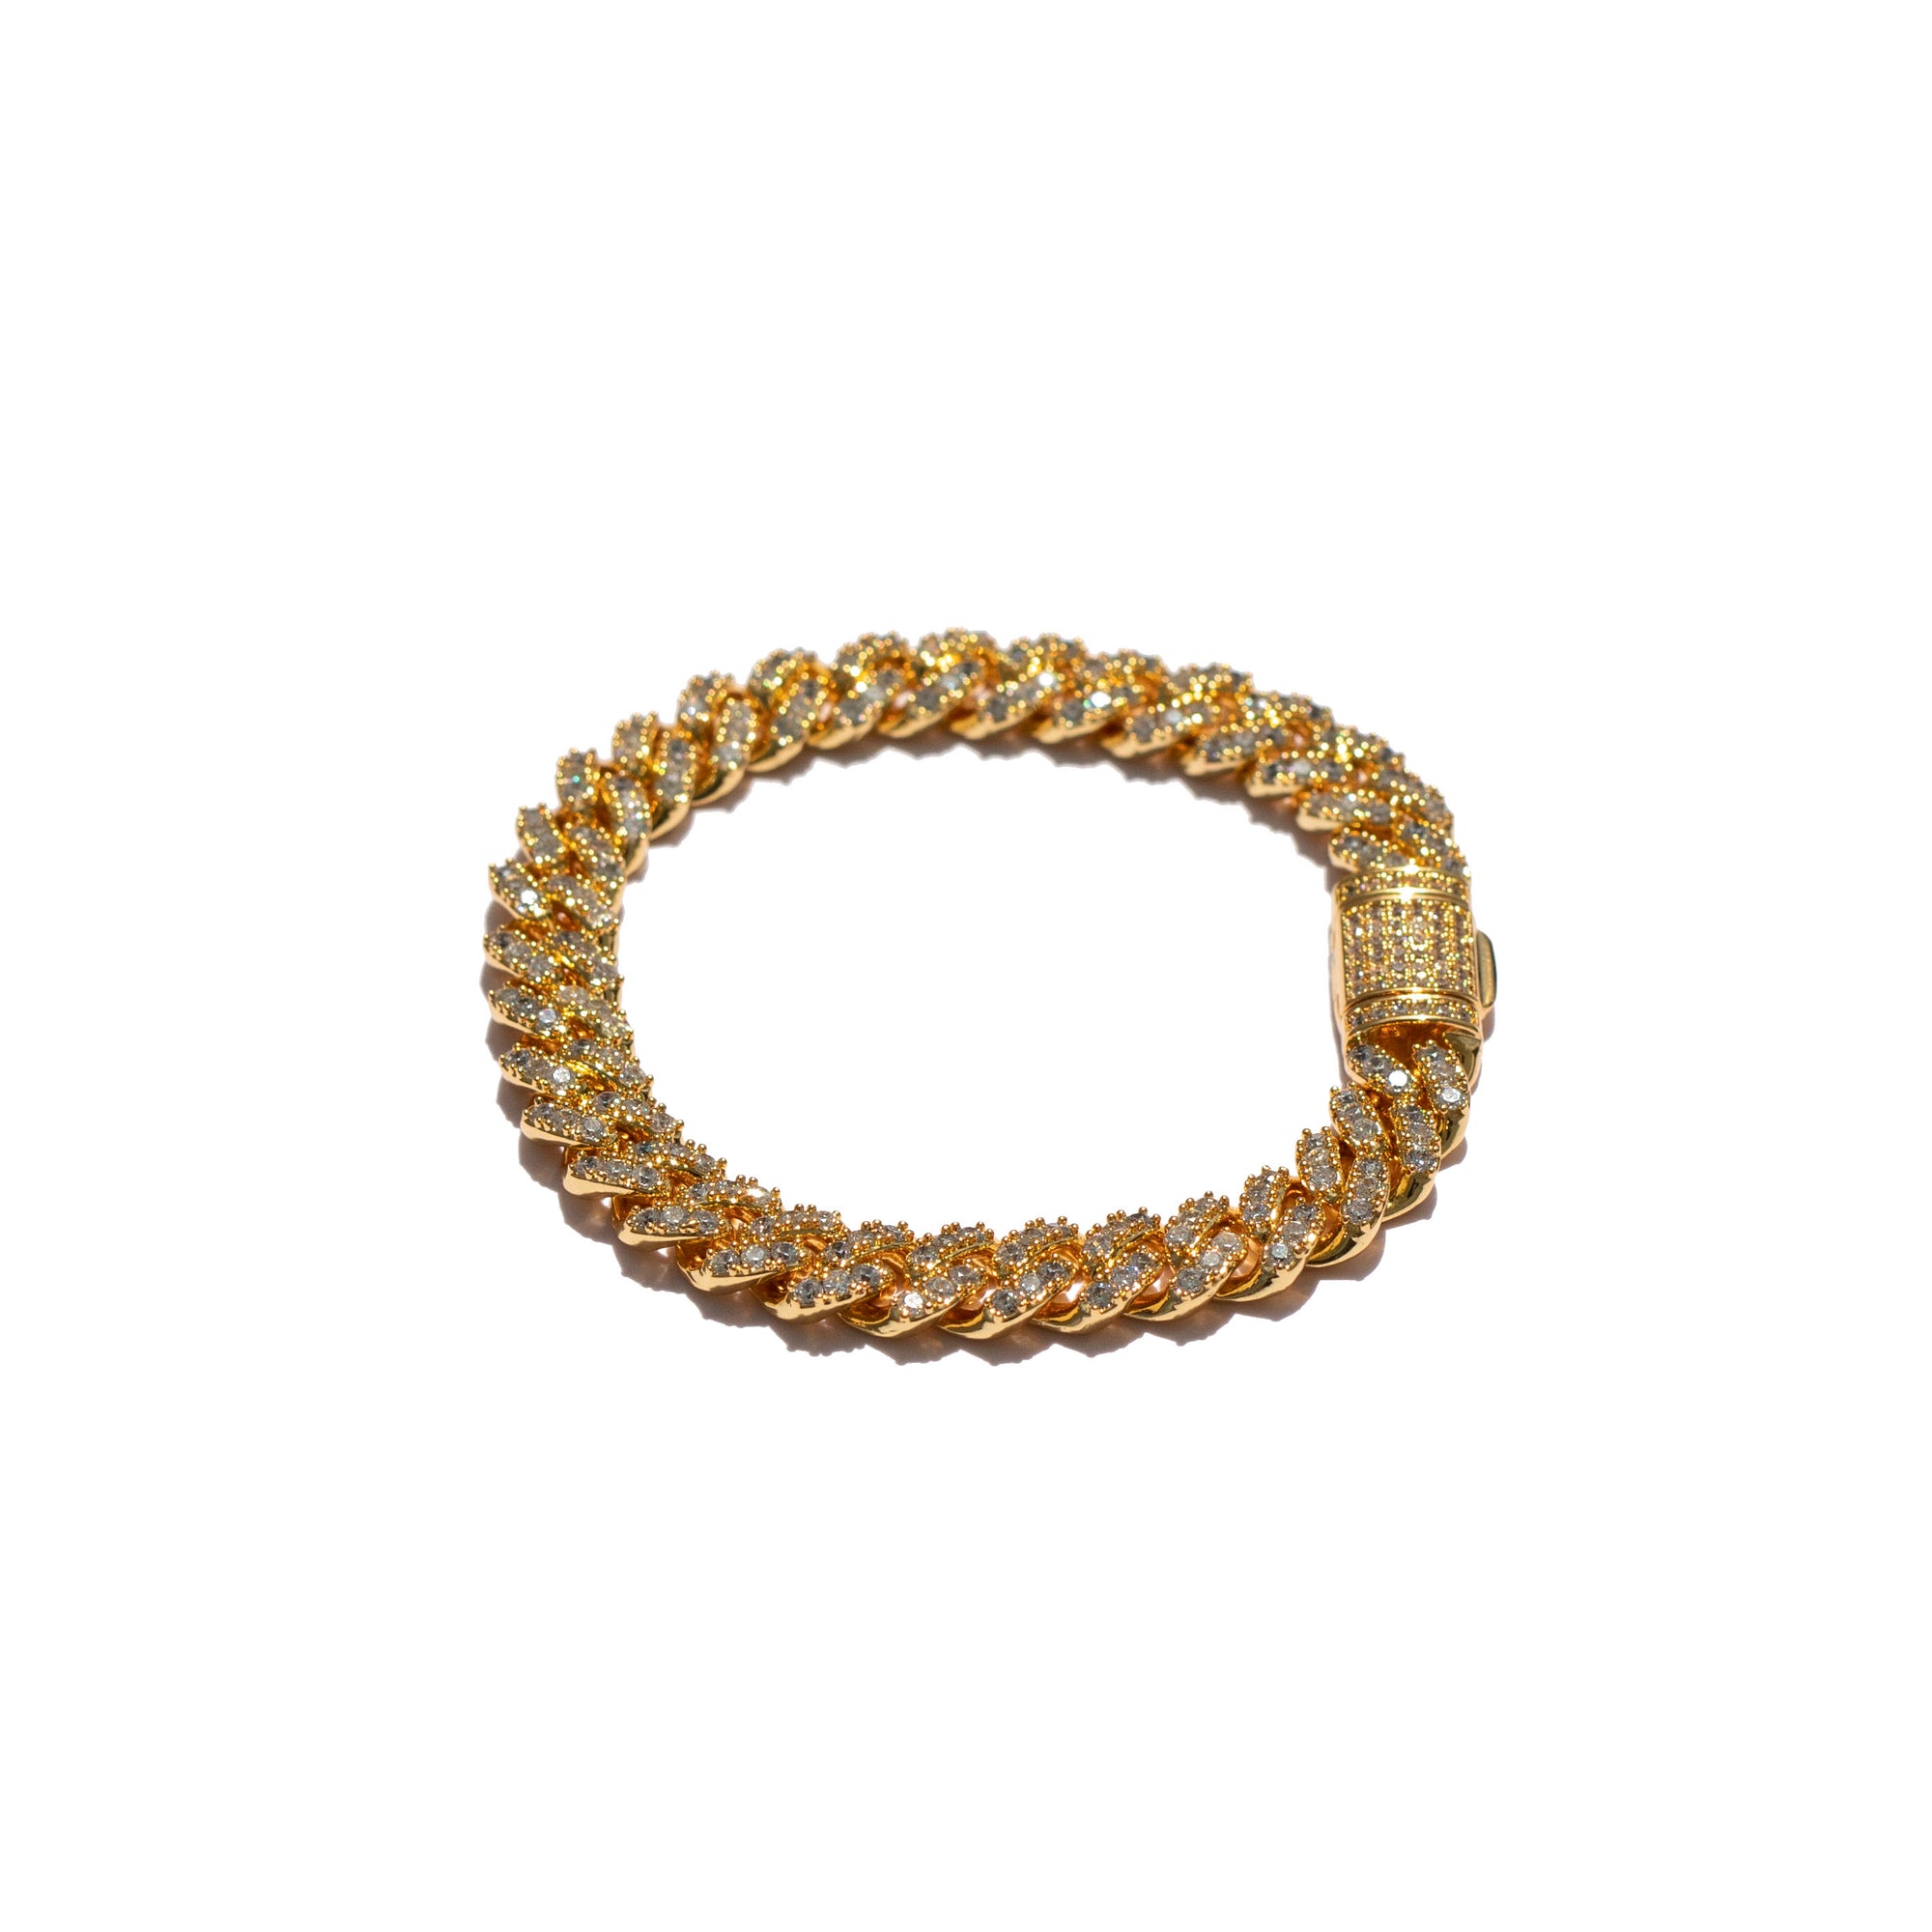 Gorgeous Demi-Fine 18K Gold Filled Premium Cuban Link Pave Bracelet with Locking Clasp